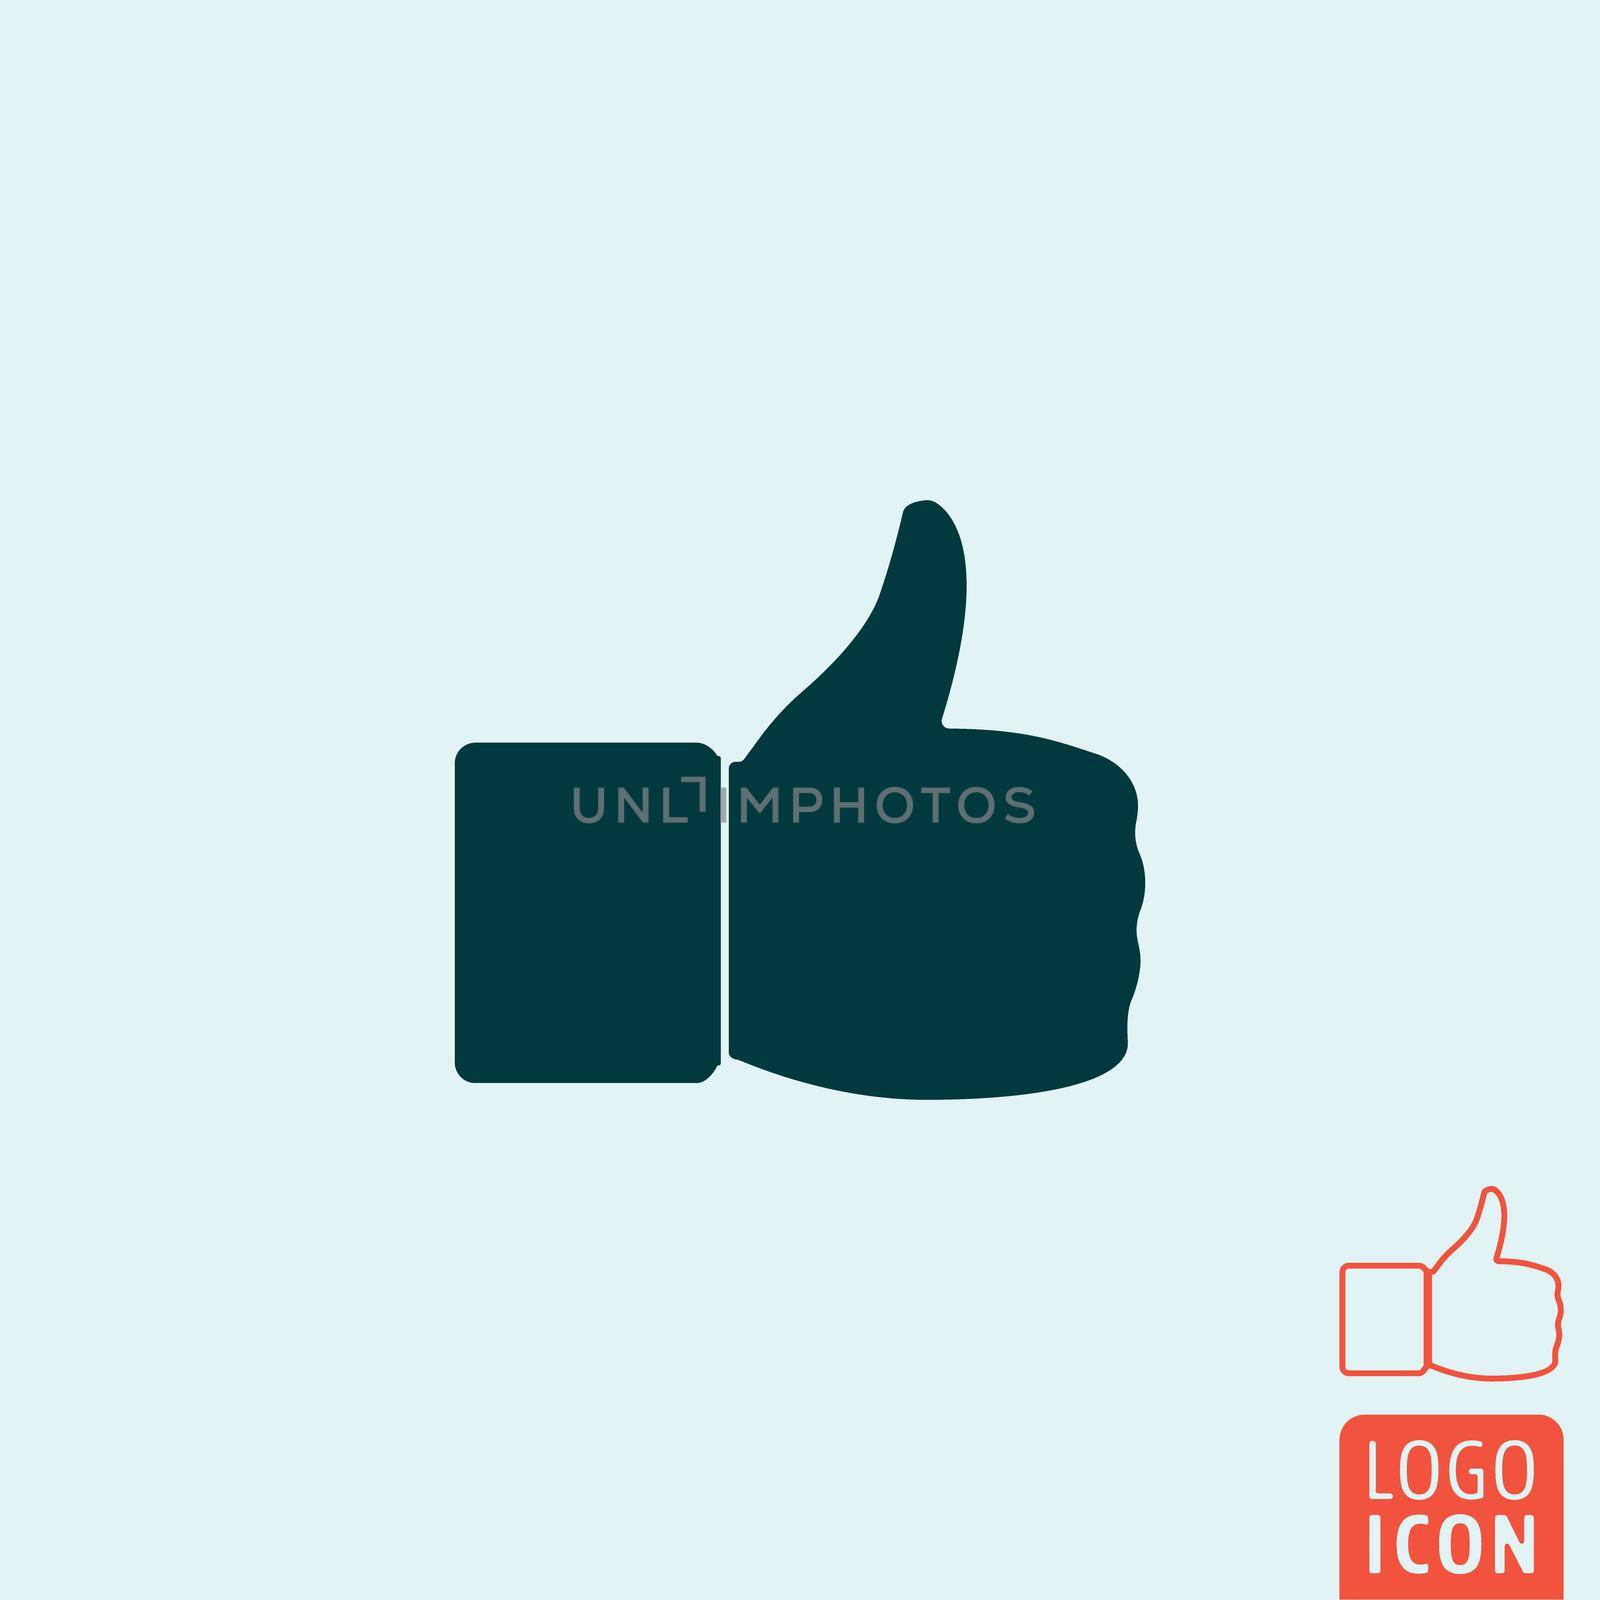 Thumb up icon. Thumb up logo. Thumb up symbol. Thumb up line icon isolated, minimal design. Vector illustration